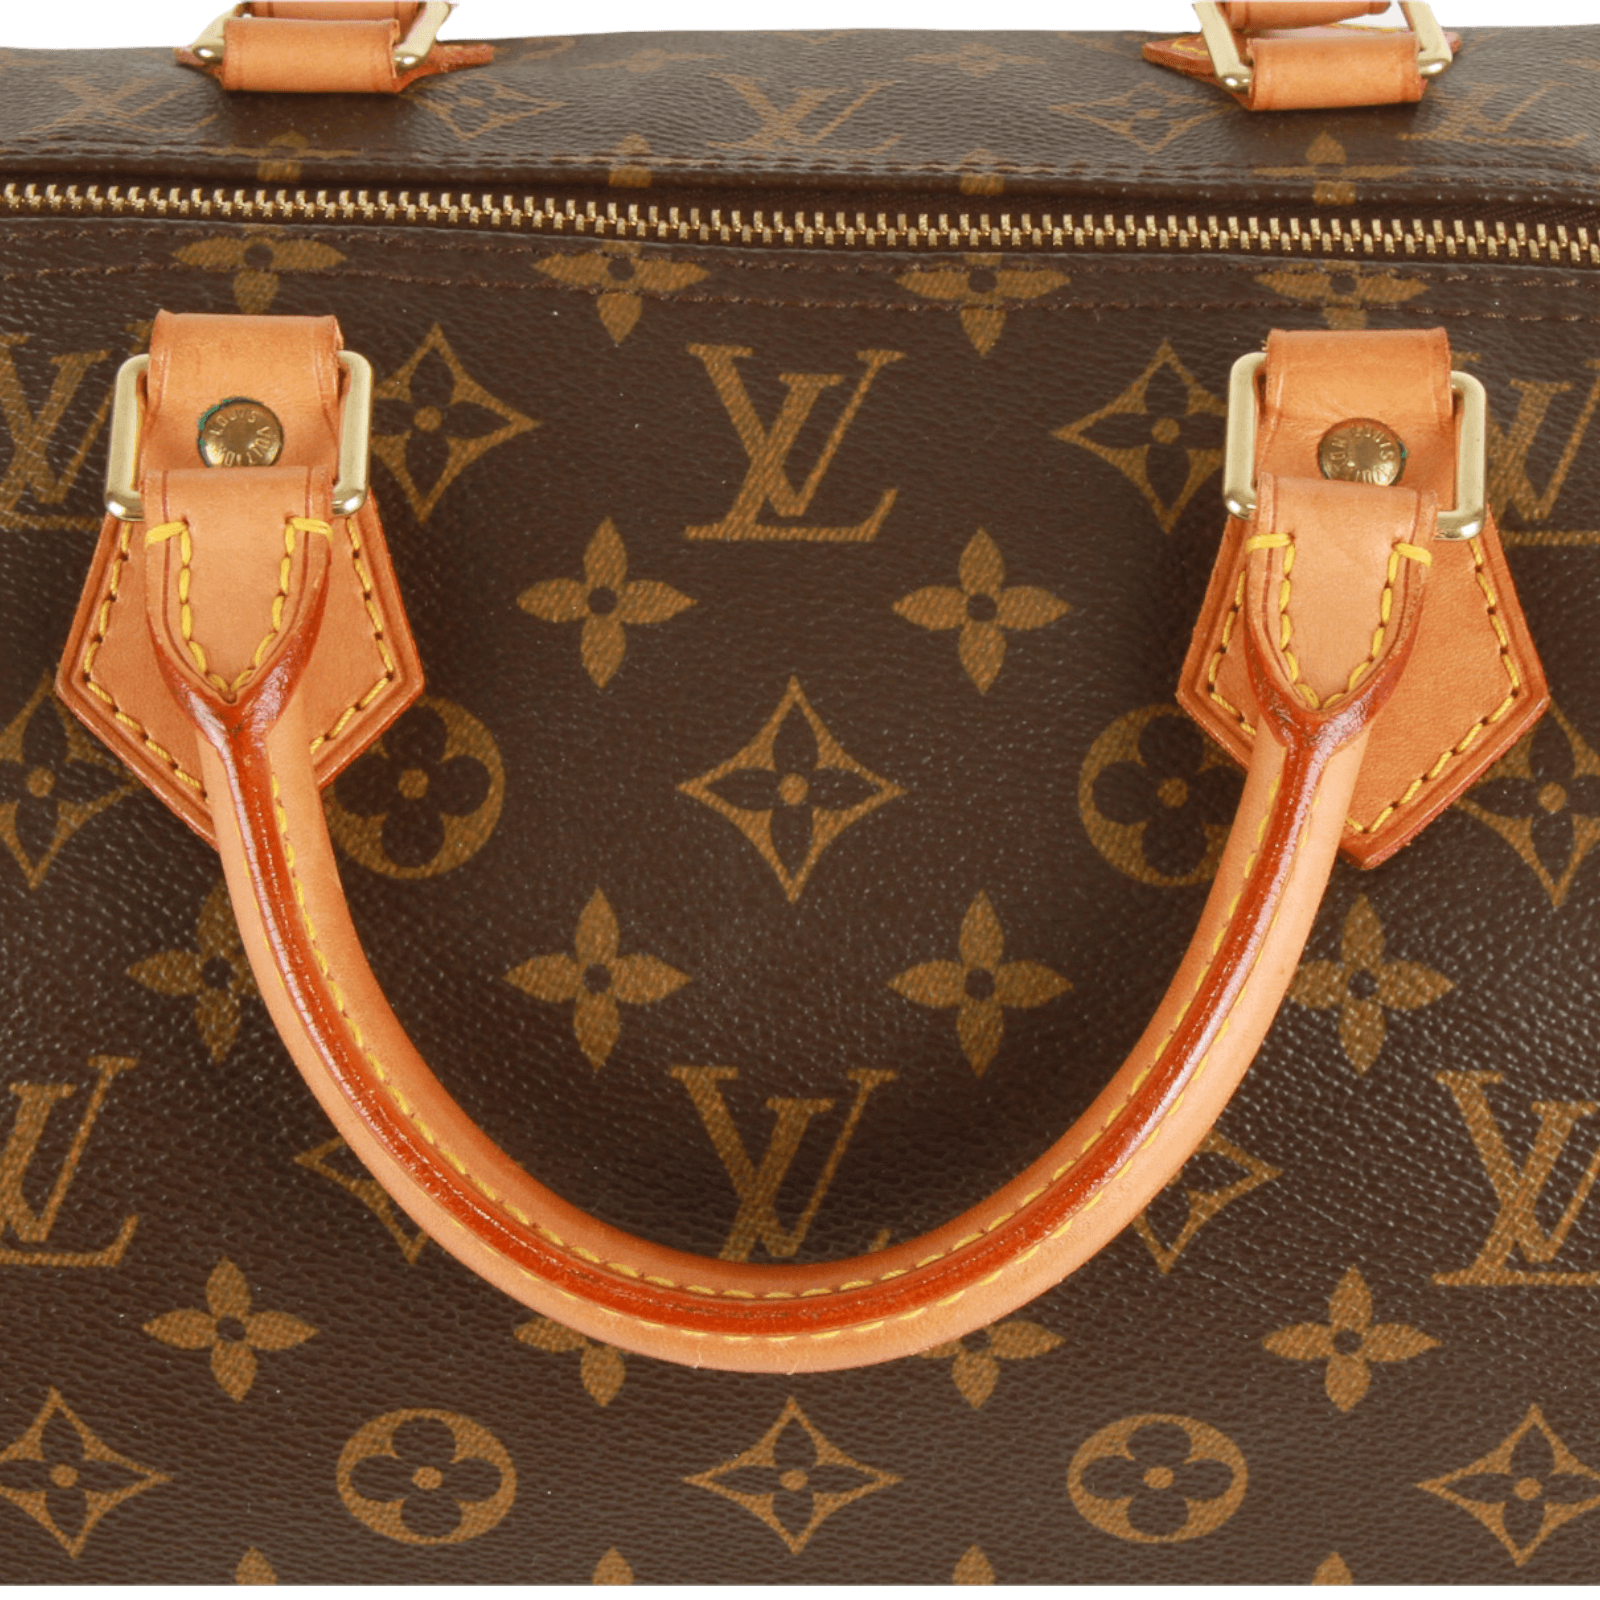 Louis Vuitton Speedy 40 Handbag – Timeless Vintage Company